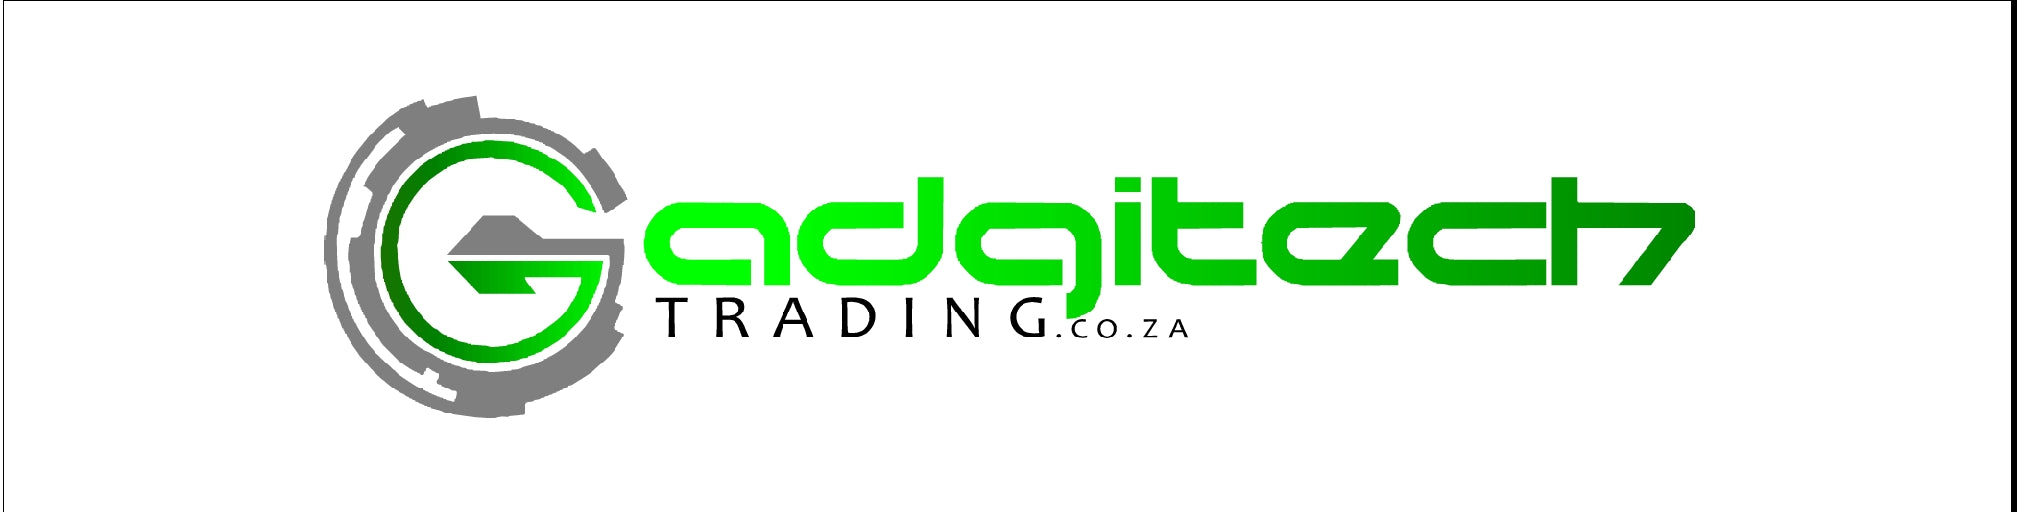 www.gadgitechtrading.co.za